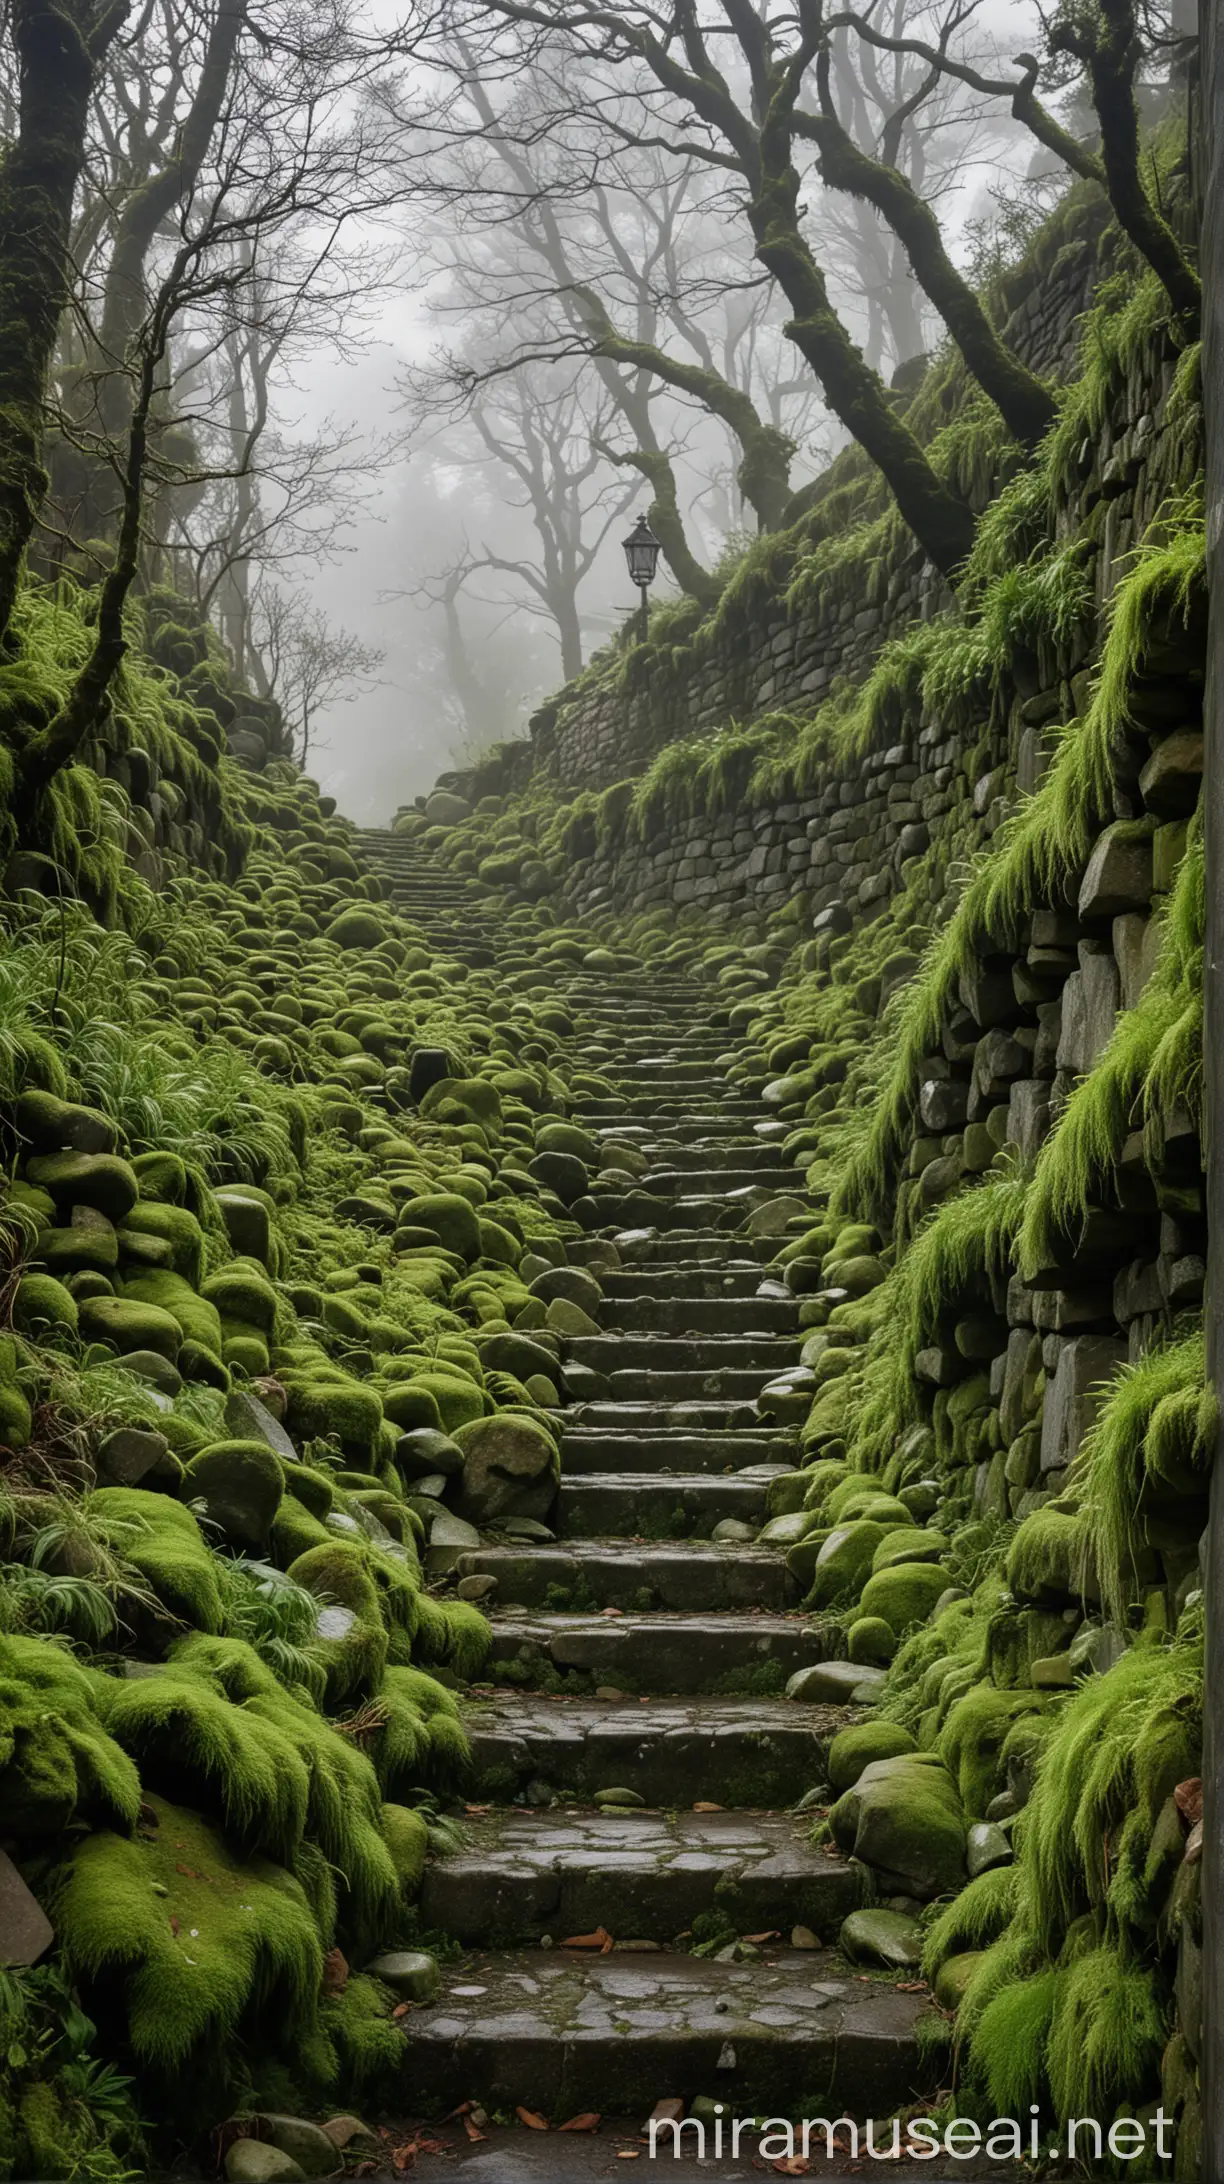 Misty Stone Staircase Descending a Mountain